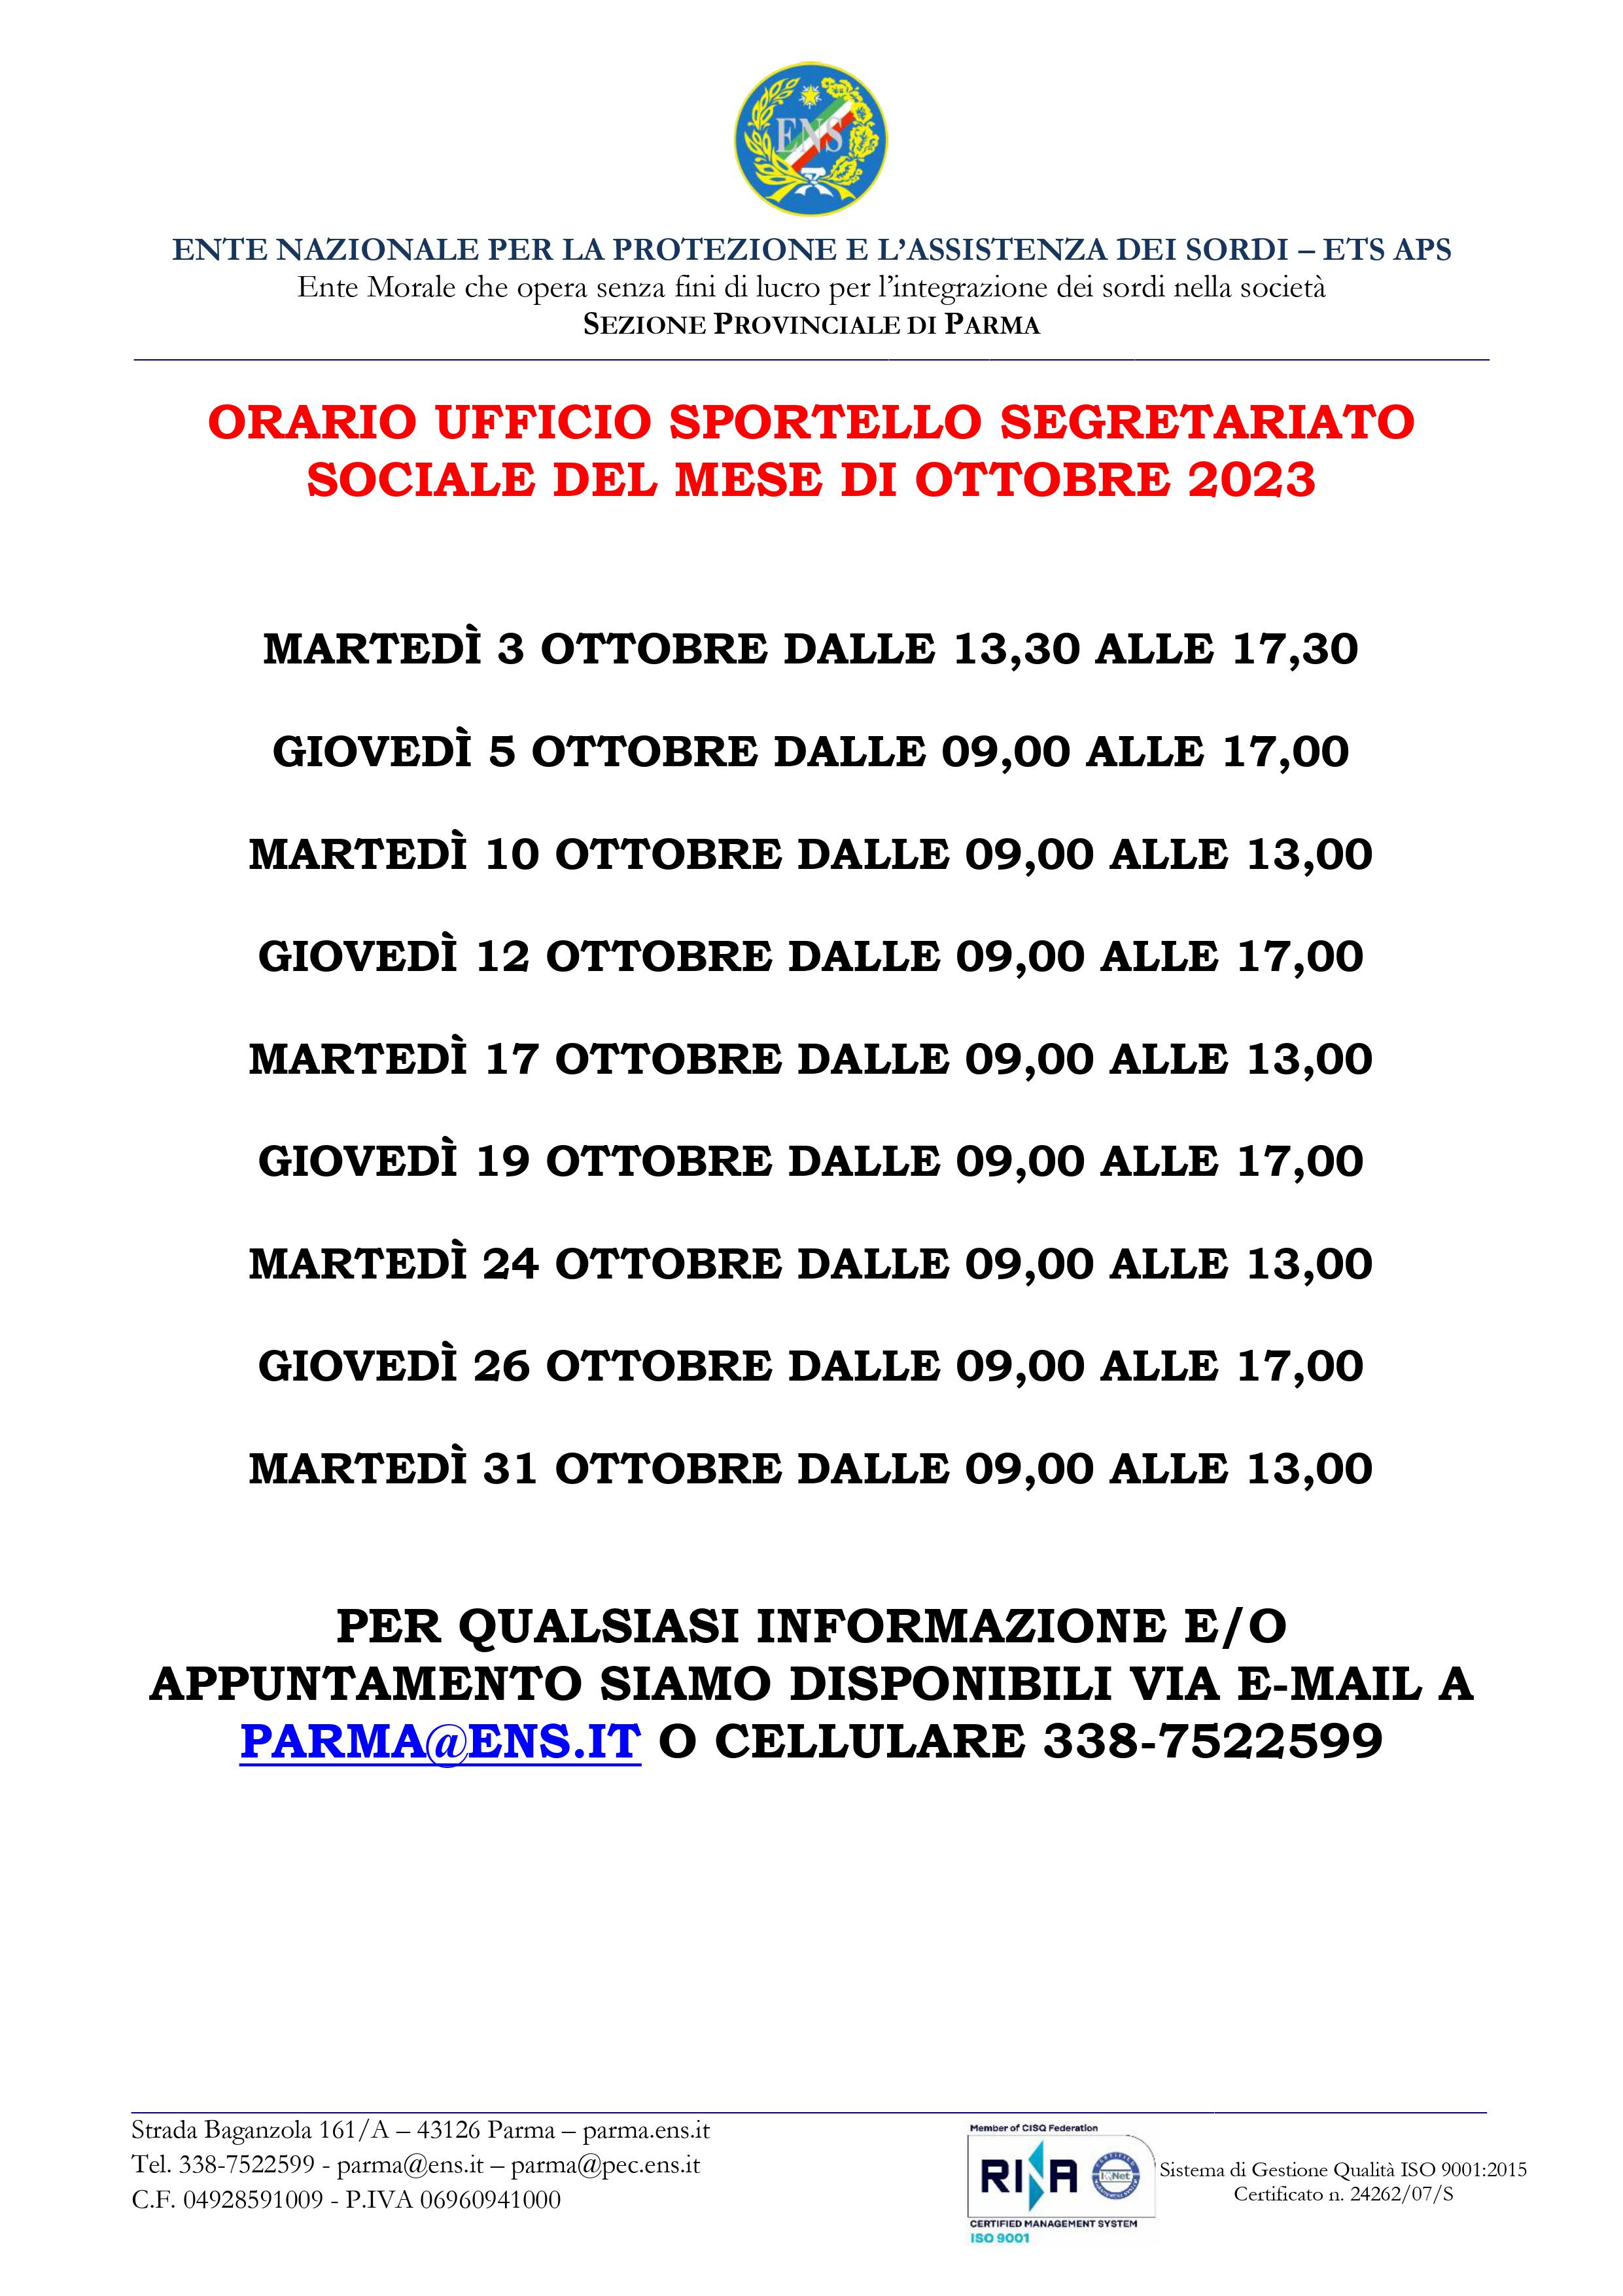 ORARIO UFFICIO OTTOBRE 2023.jpg